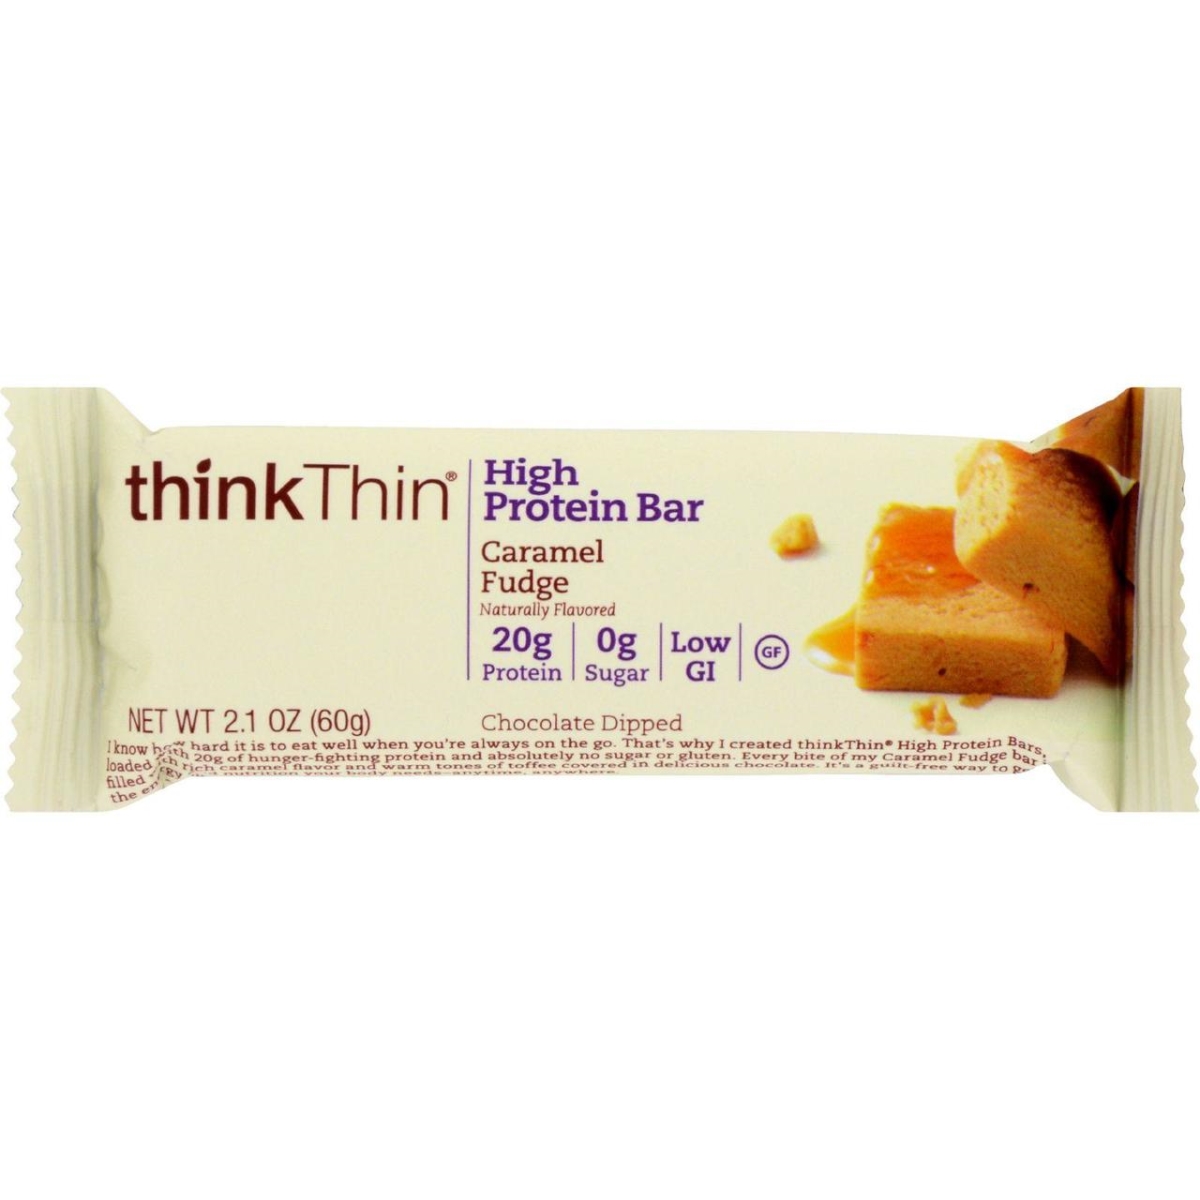 Hg1073618 2.1 Oz Thinkthin High Protein Bar, Caramel Fudge - Case Of 10